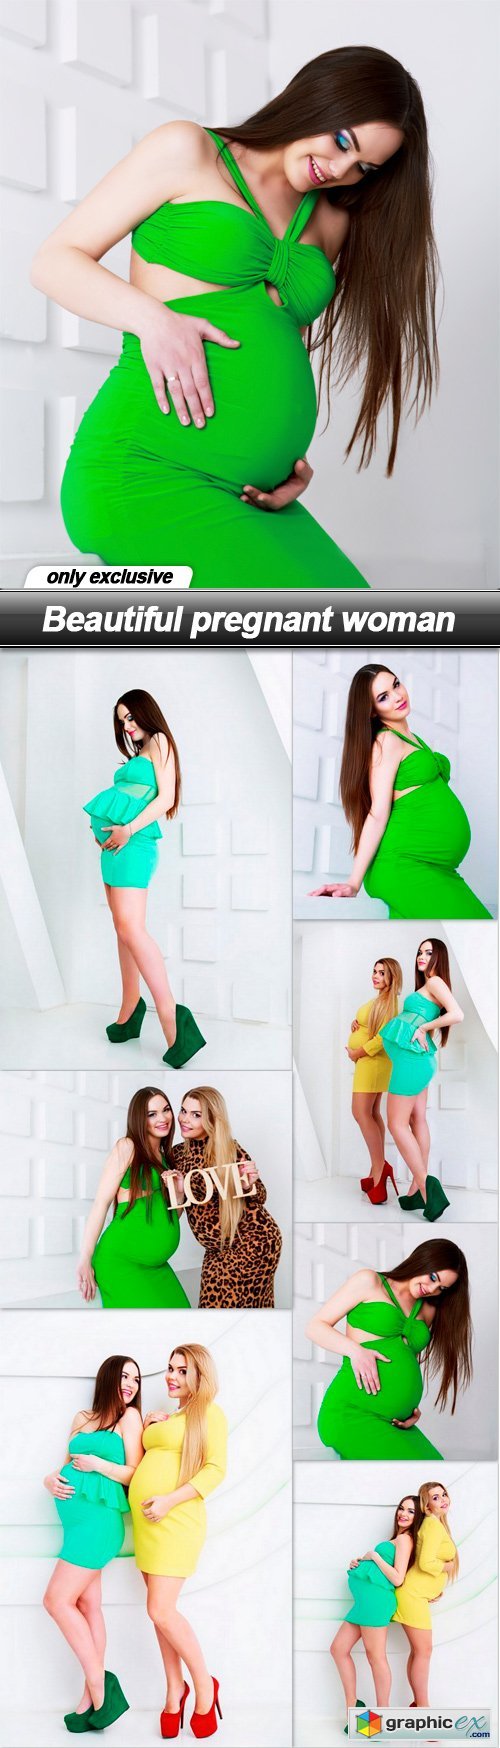 Beautiful pregnant woman 2 - 7 UHQ JPEG